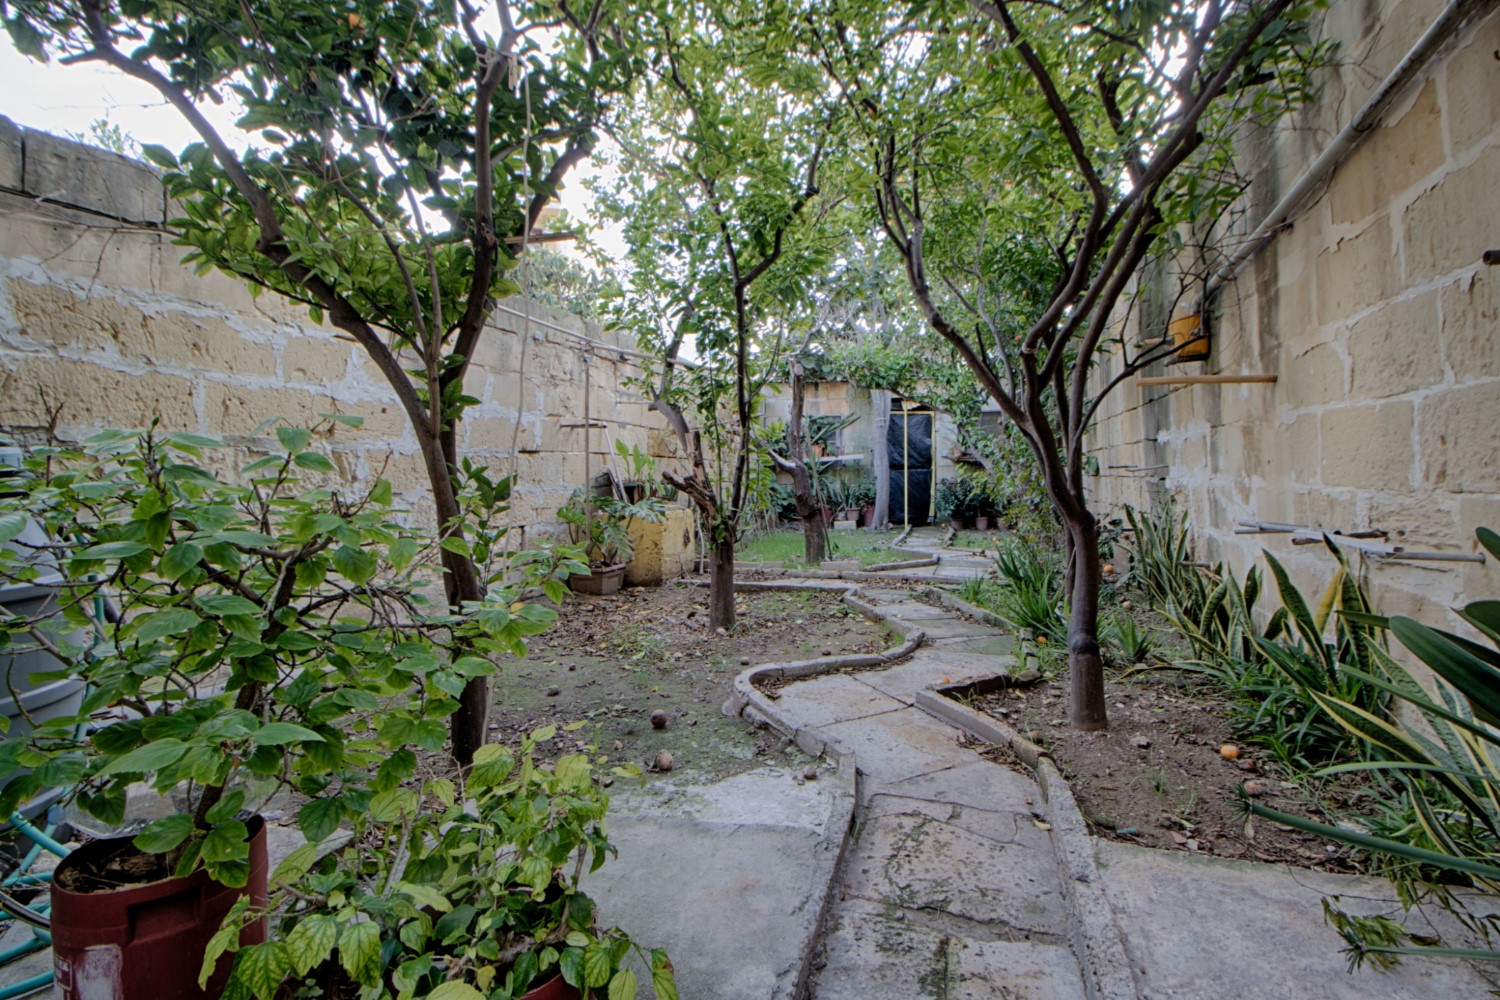 Back Yard - Townhouse with a large backyard